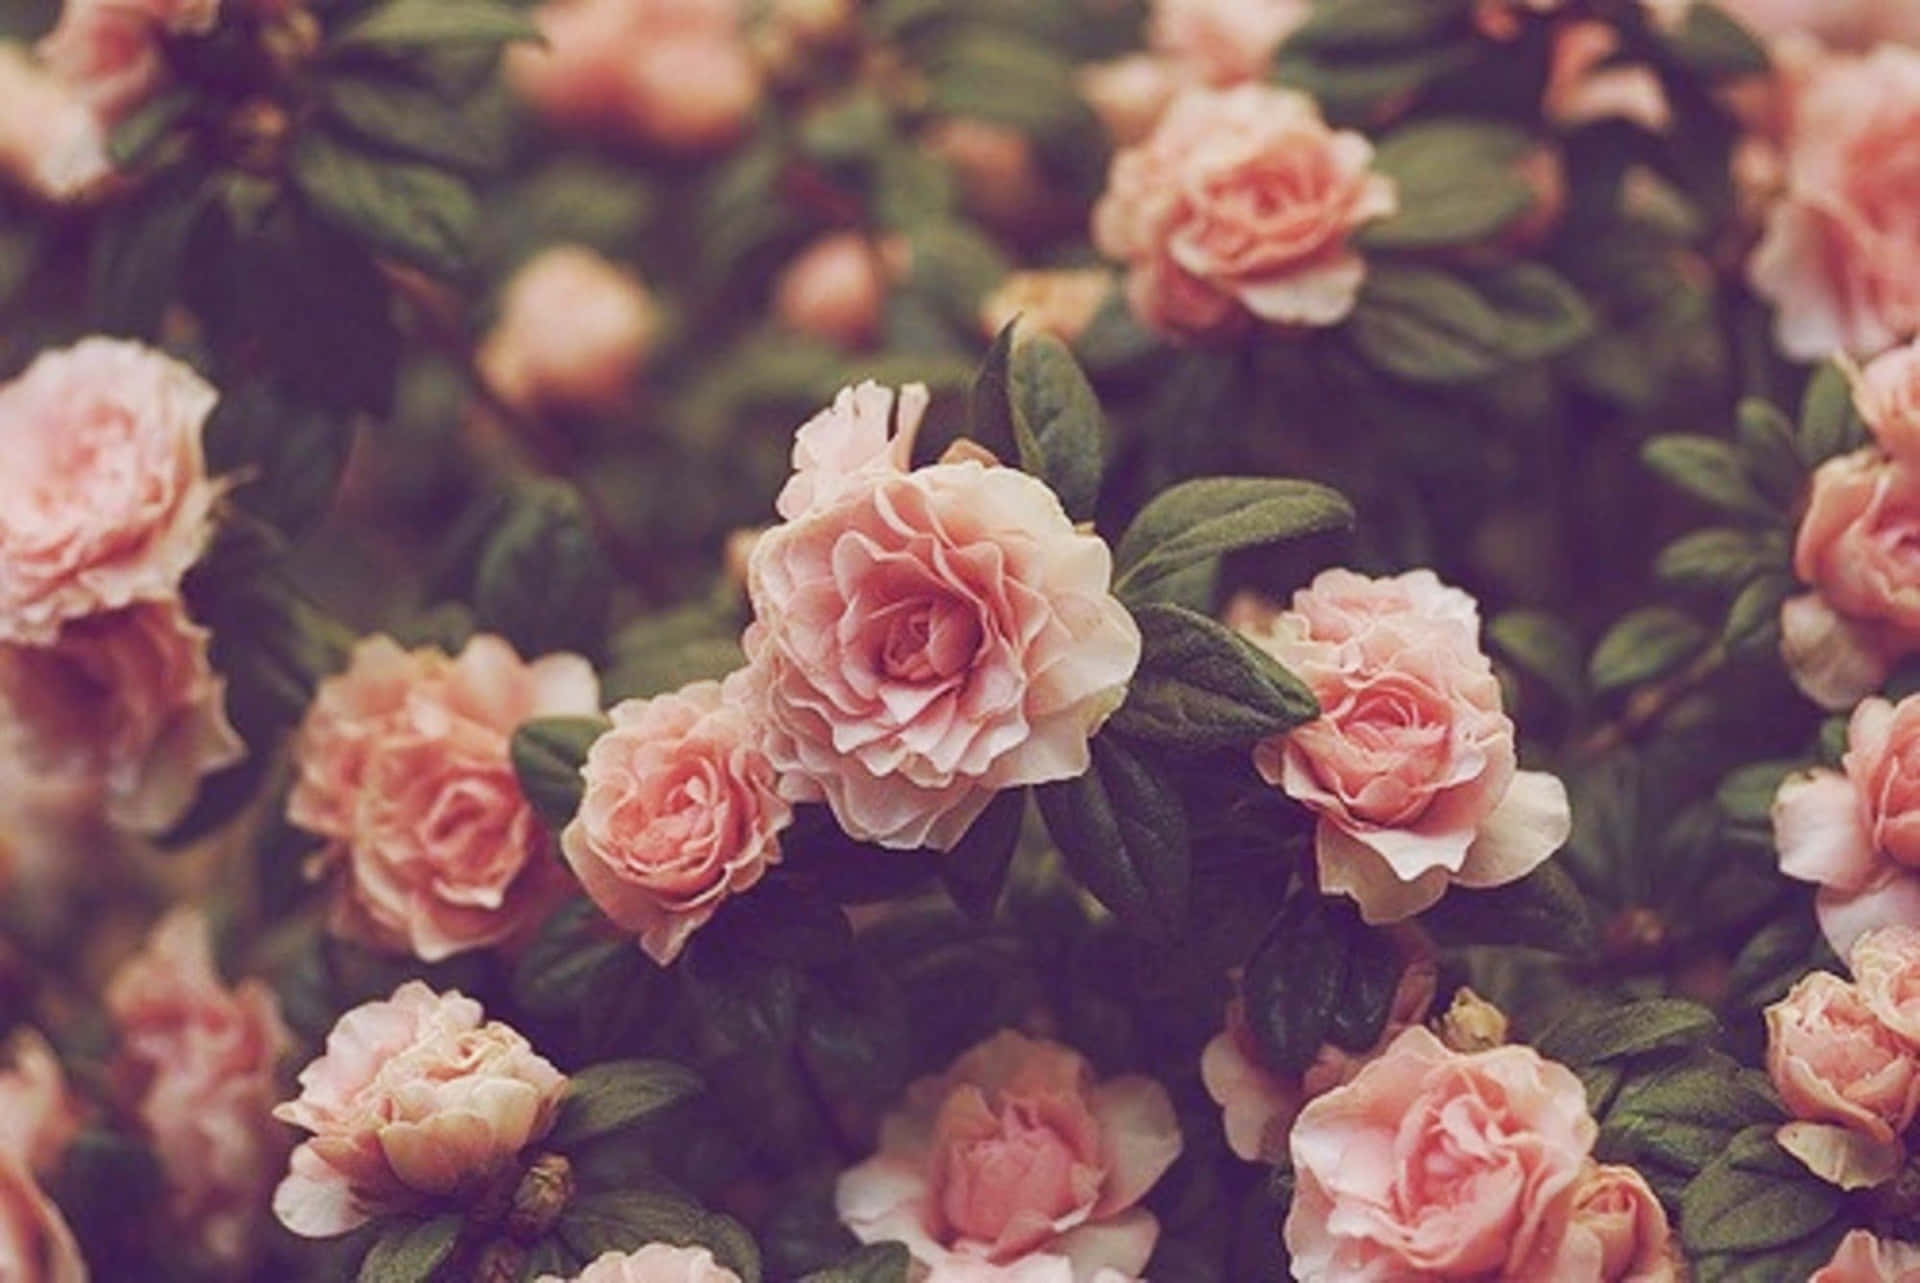 floral desktop wallpaper tumblr